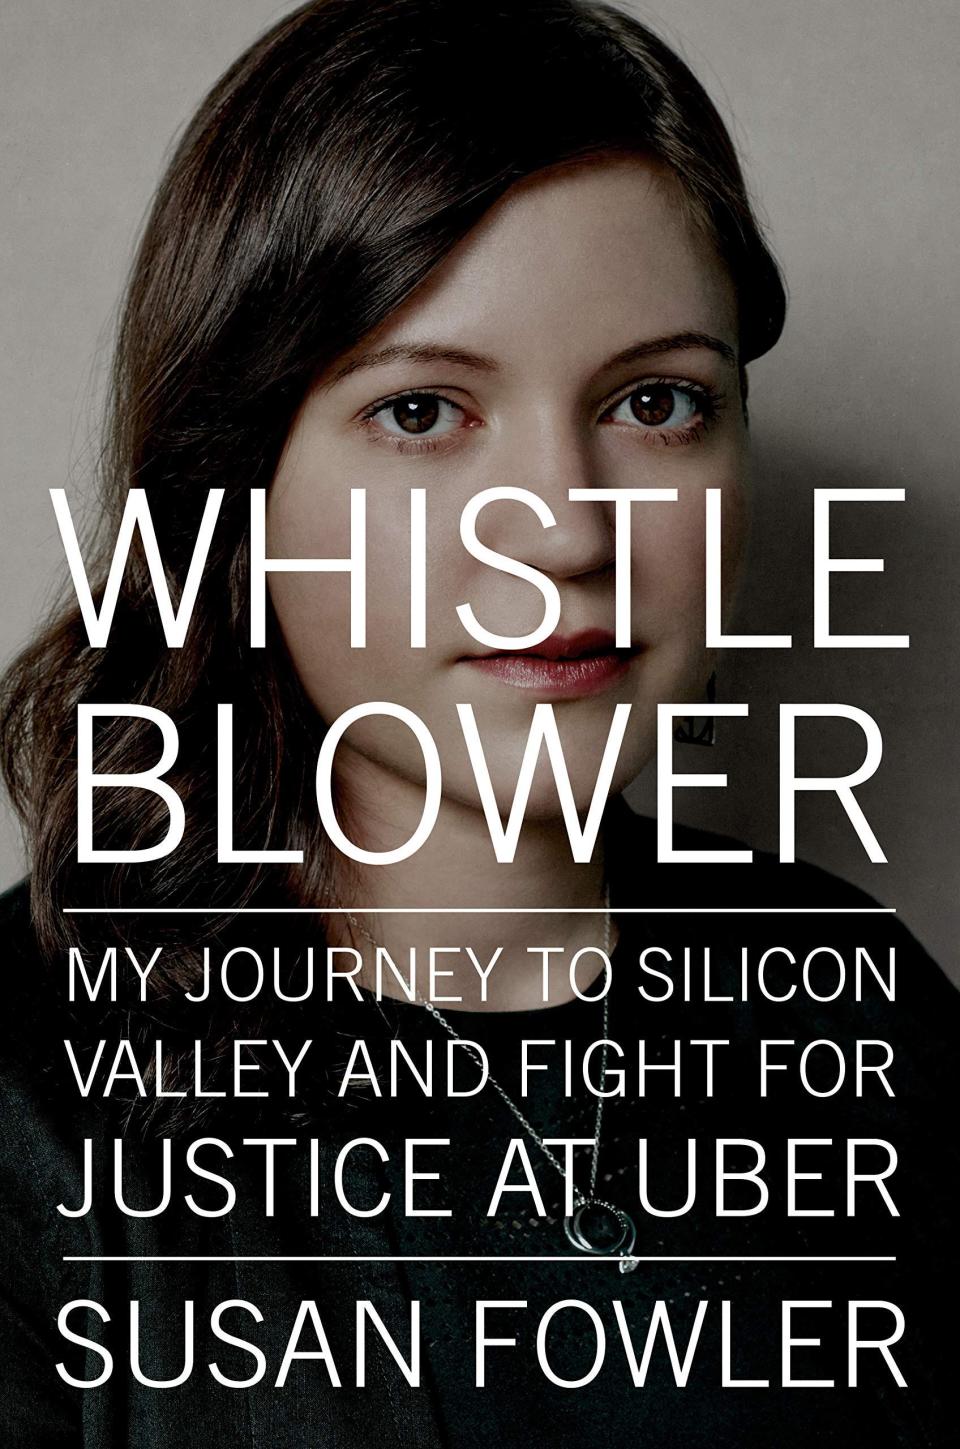 ‘Whistleblower’ by Susan Fowler